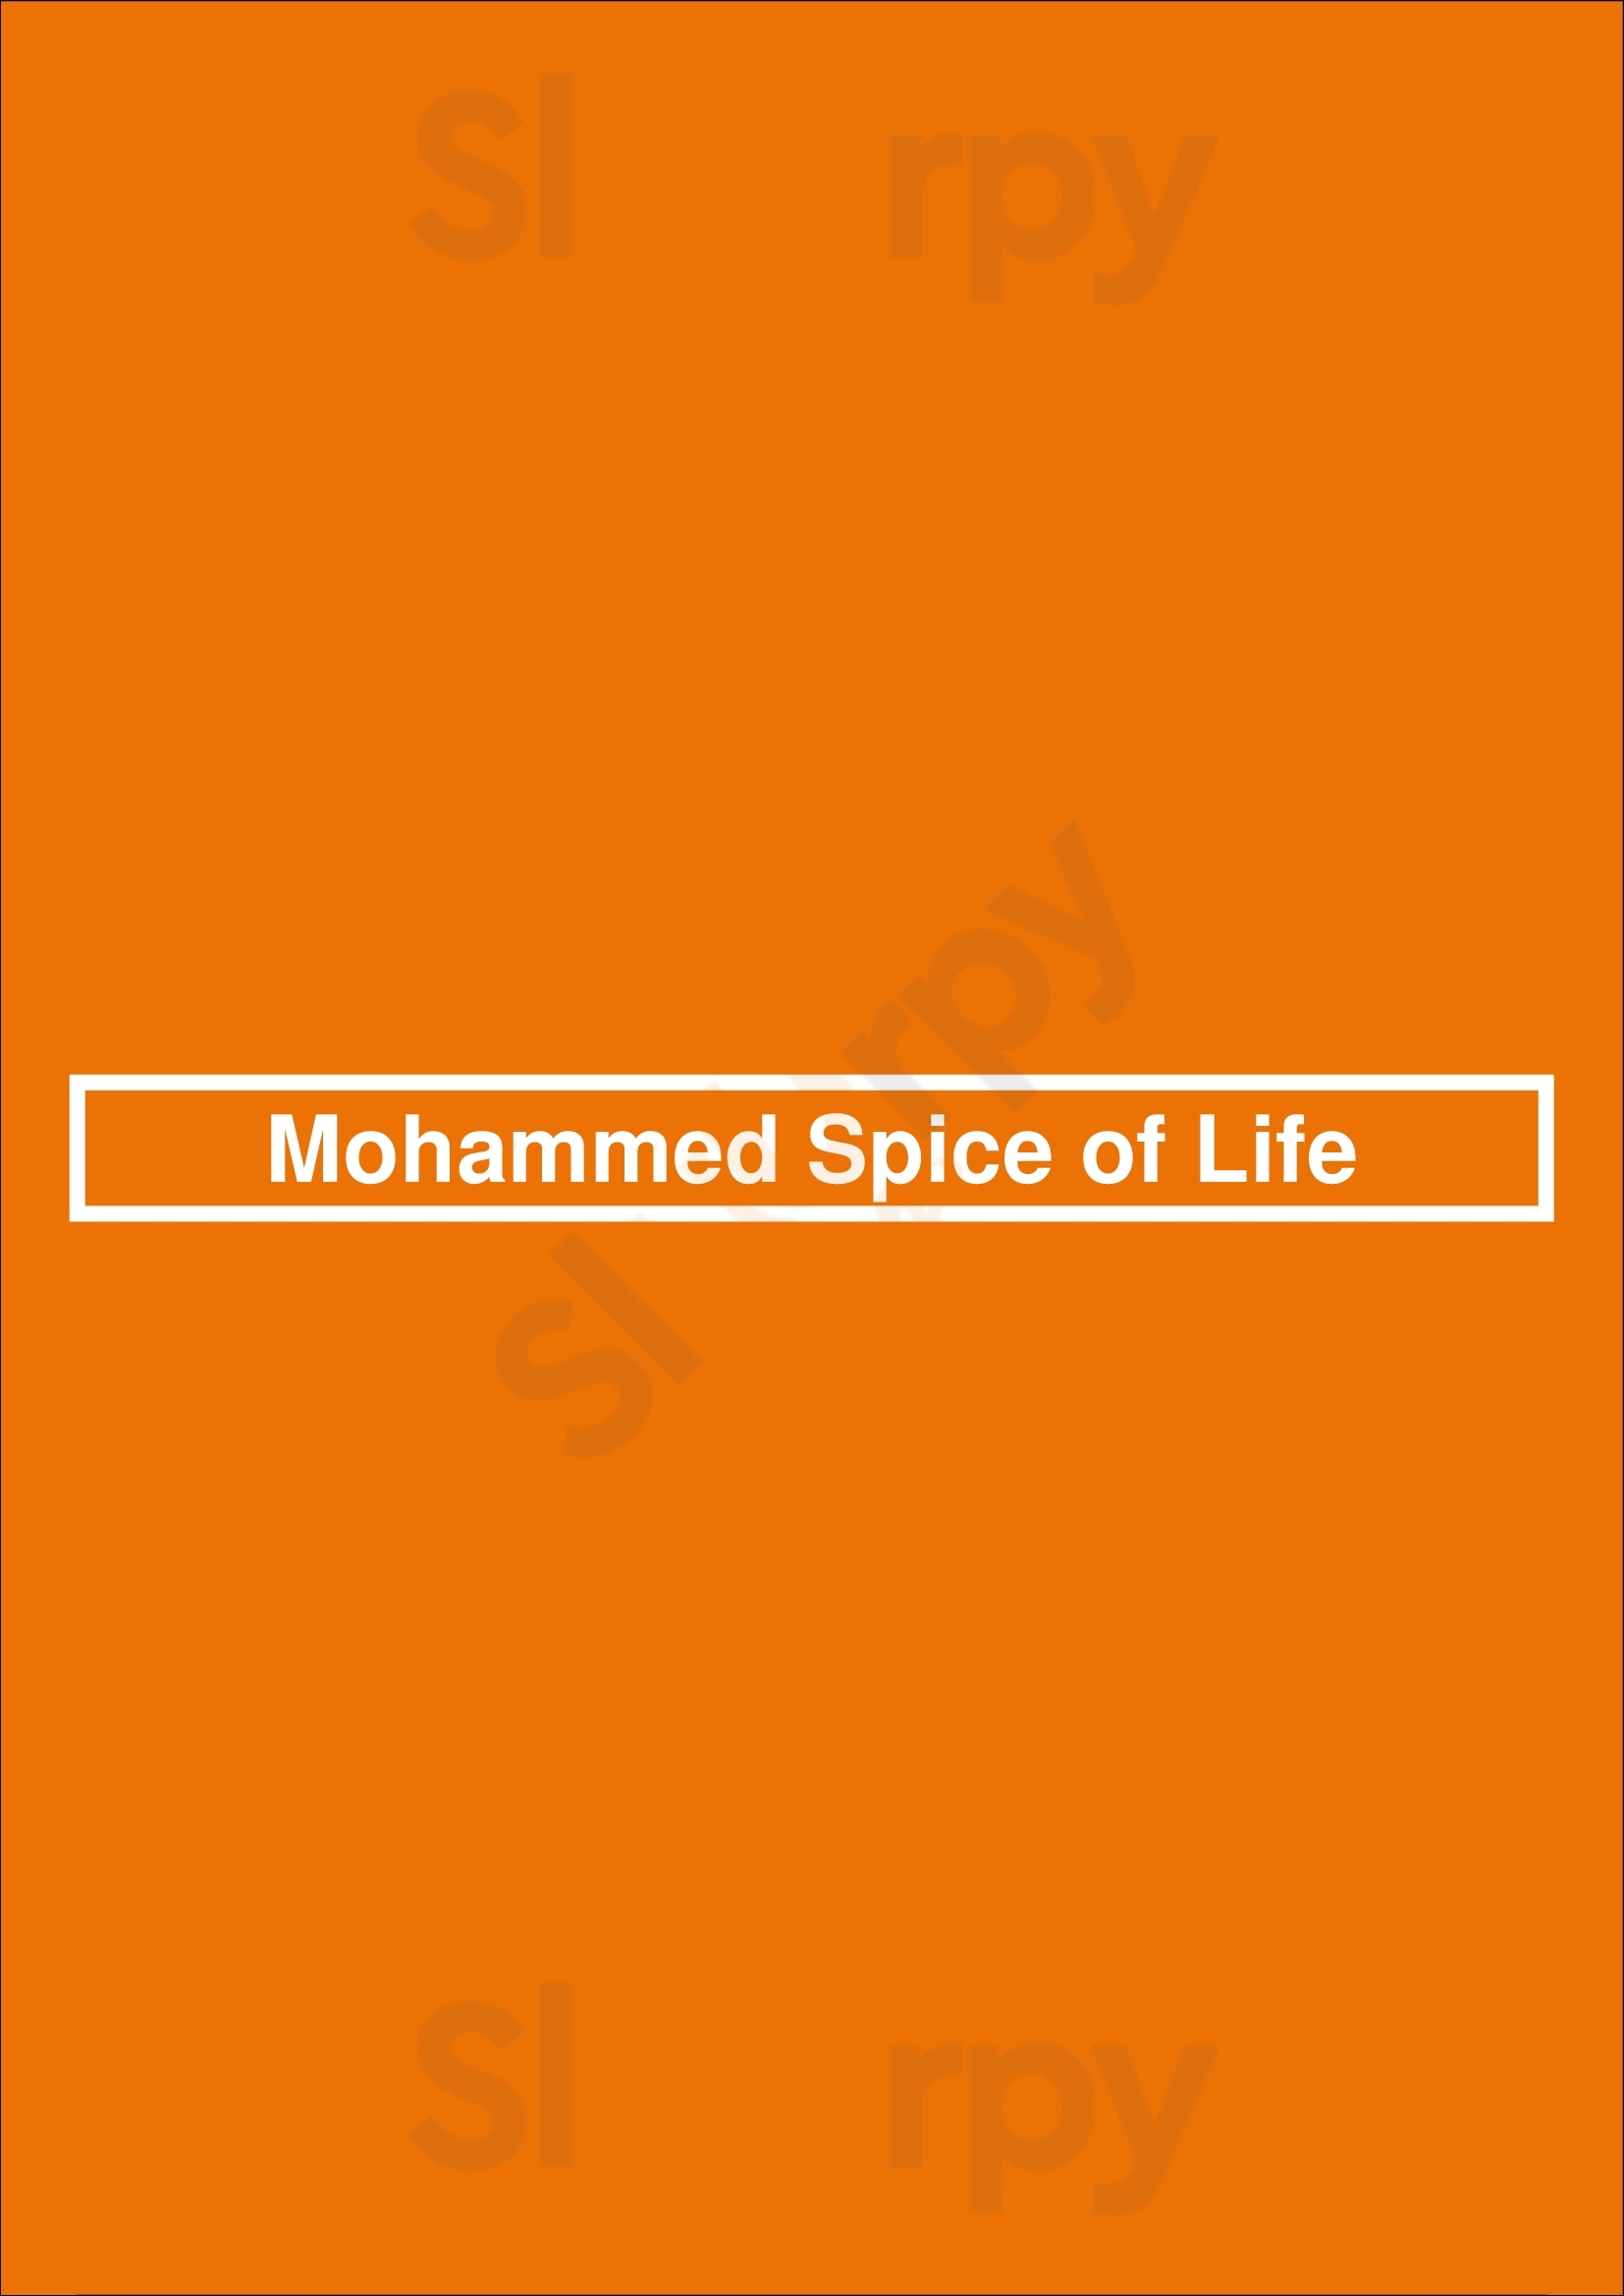 Mohammed Spice Of Life Brighton Menu - 1